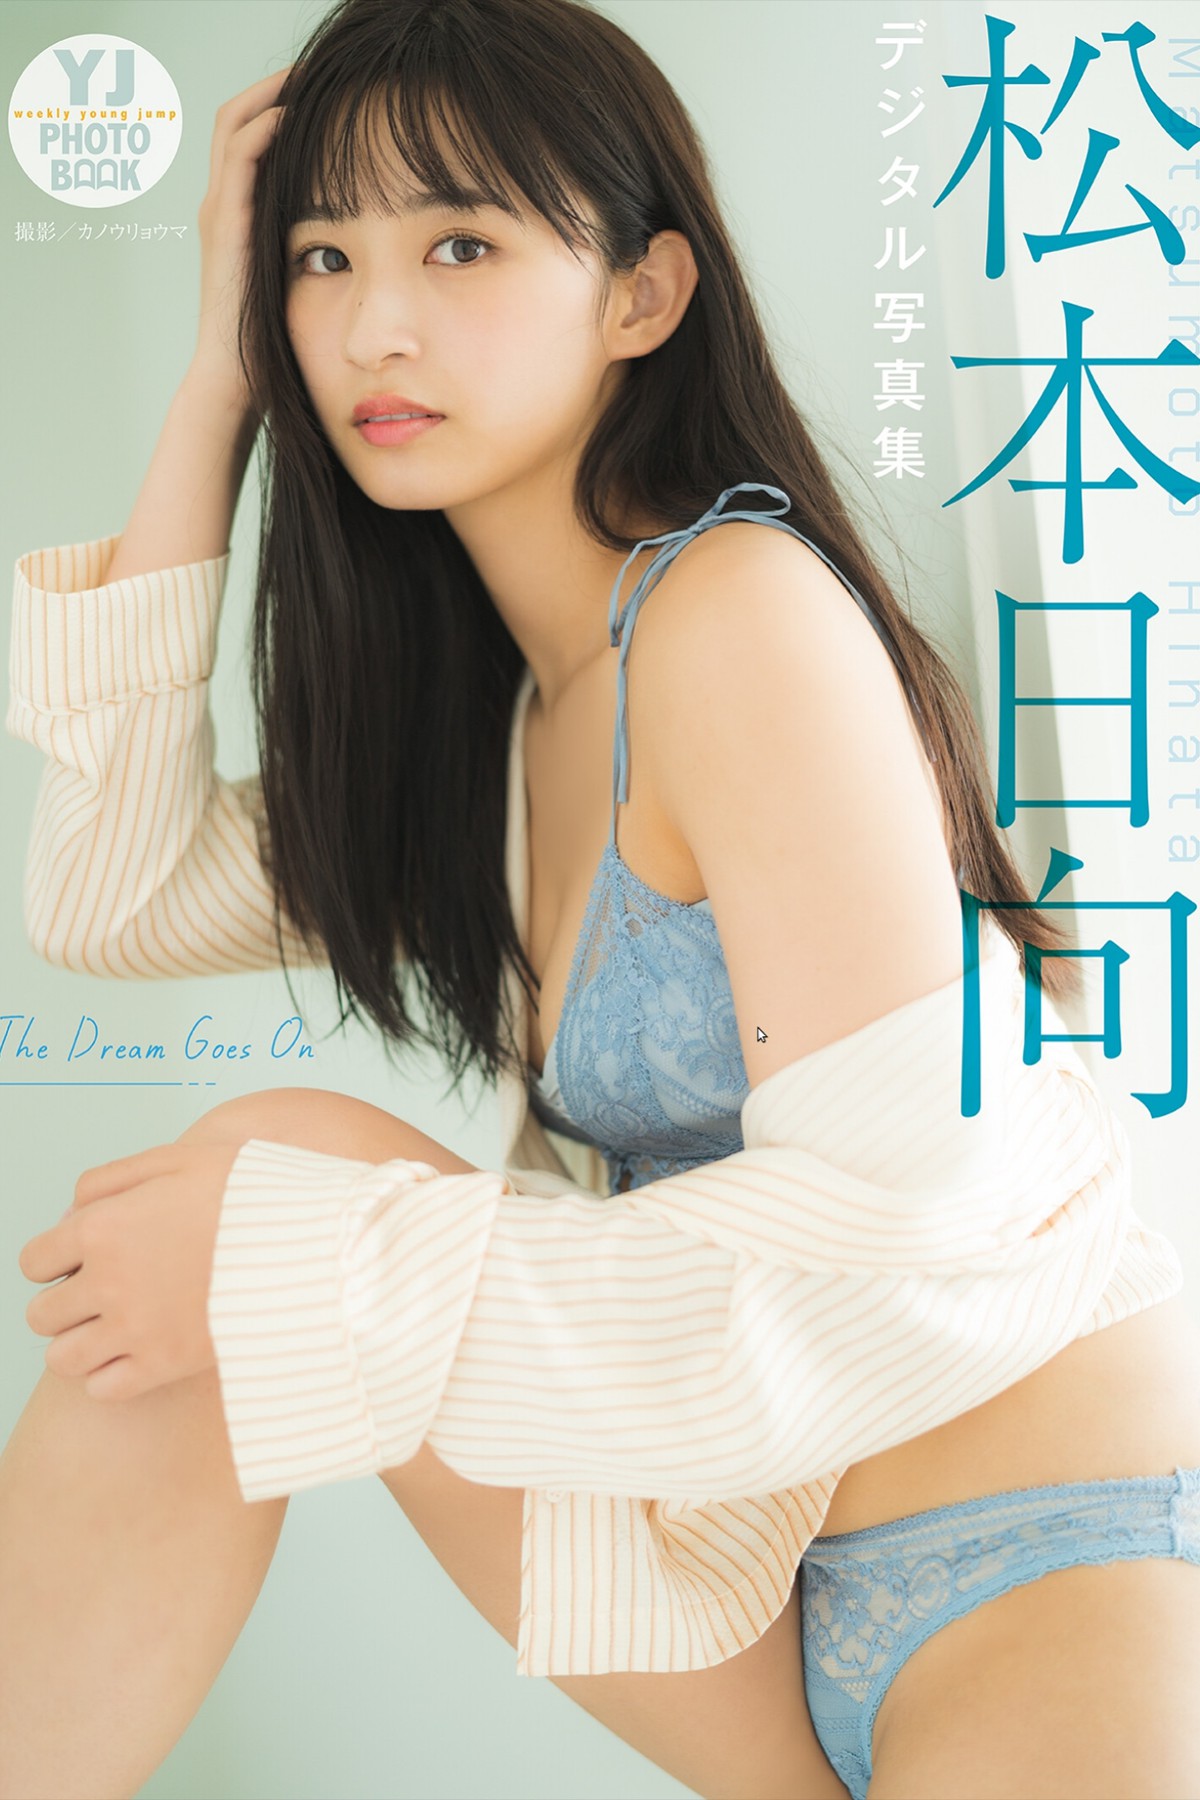 YJ Photobook 2022-11-17 Hinata Matsumoto 松本日向 – The Dream Goes On